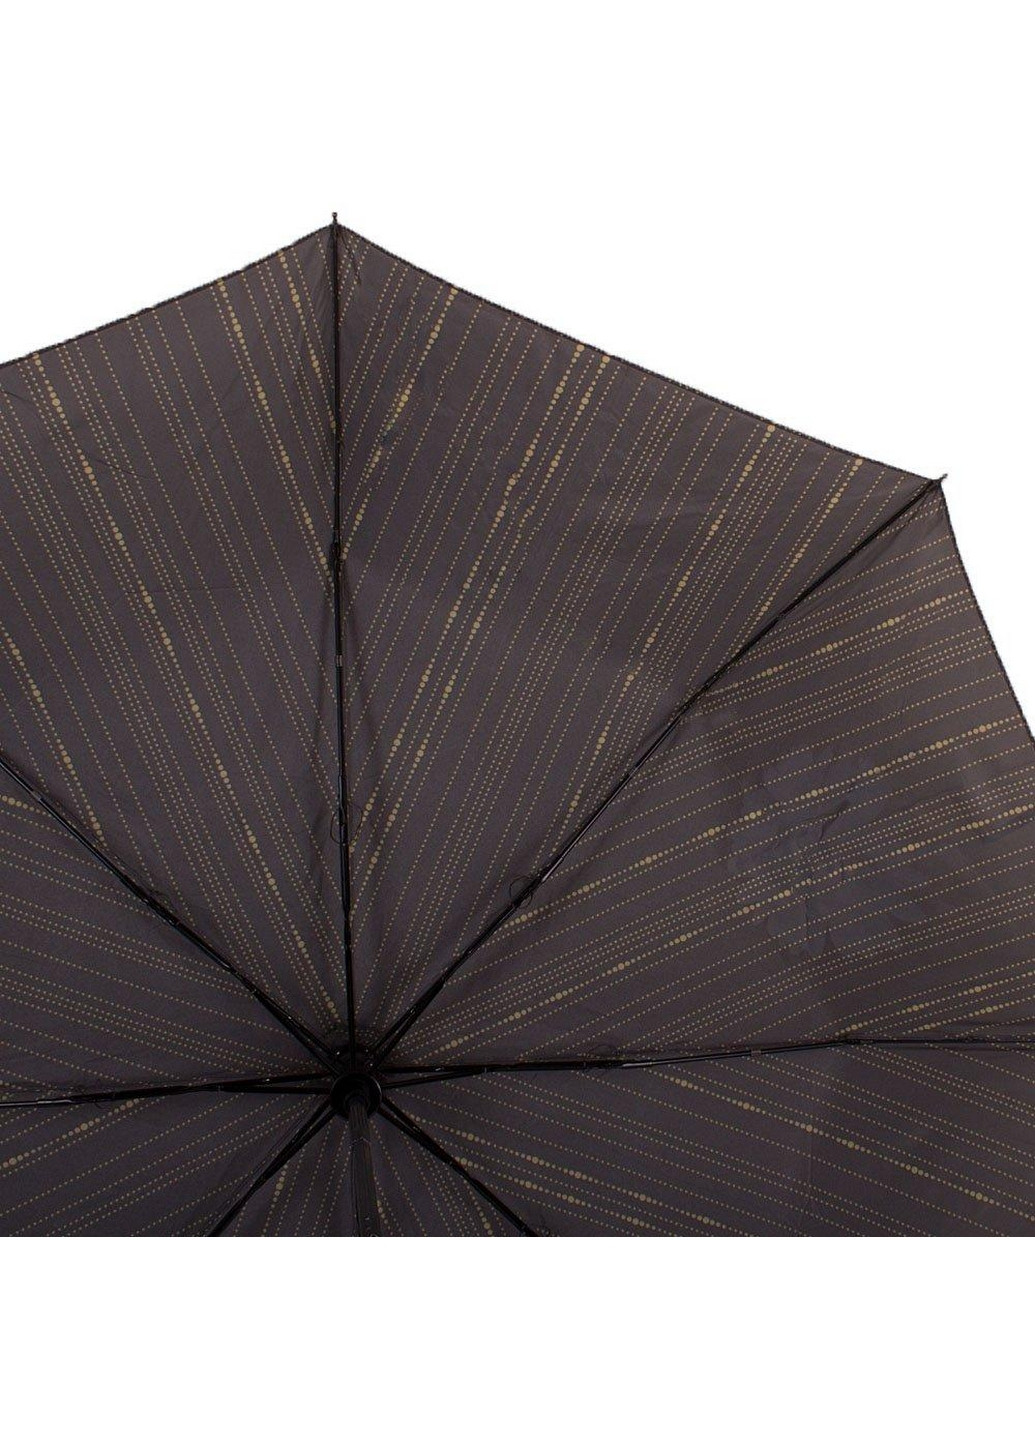 Жіноча складна парасоля напівавтомат 100 см Airton (260329640)